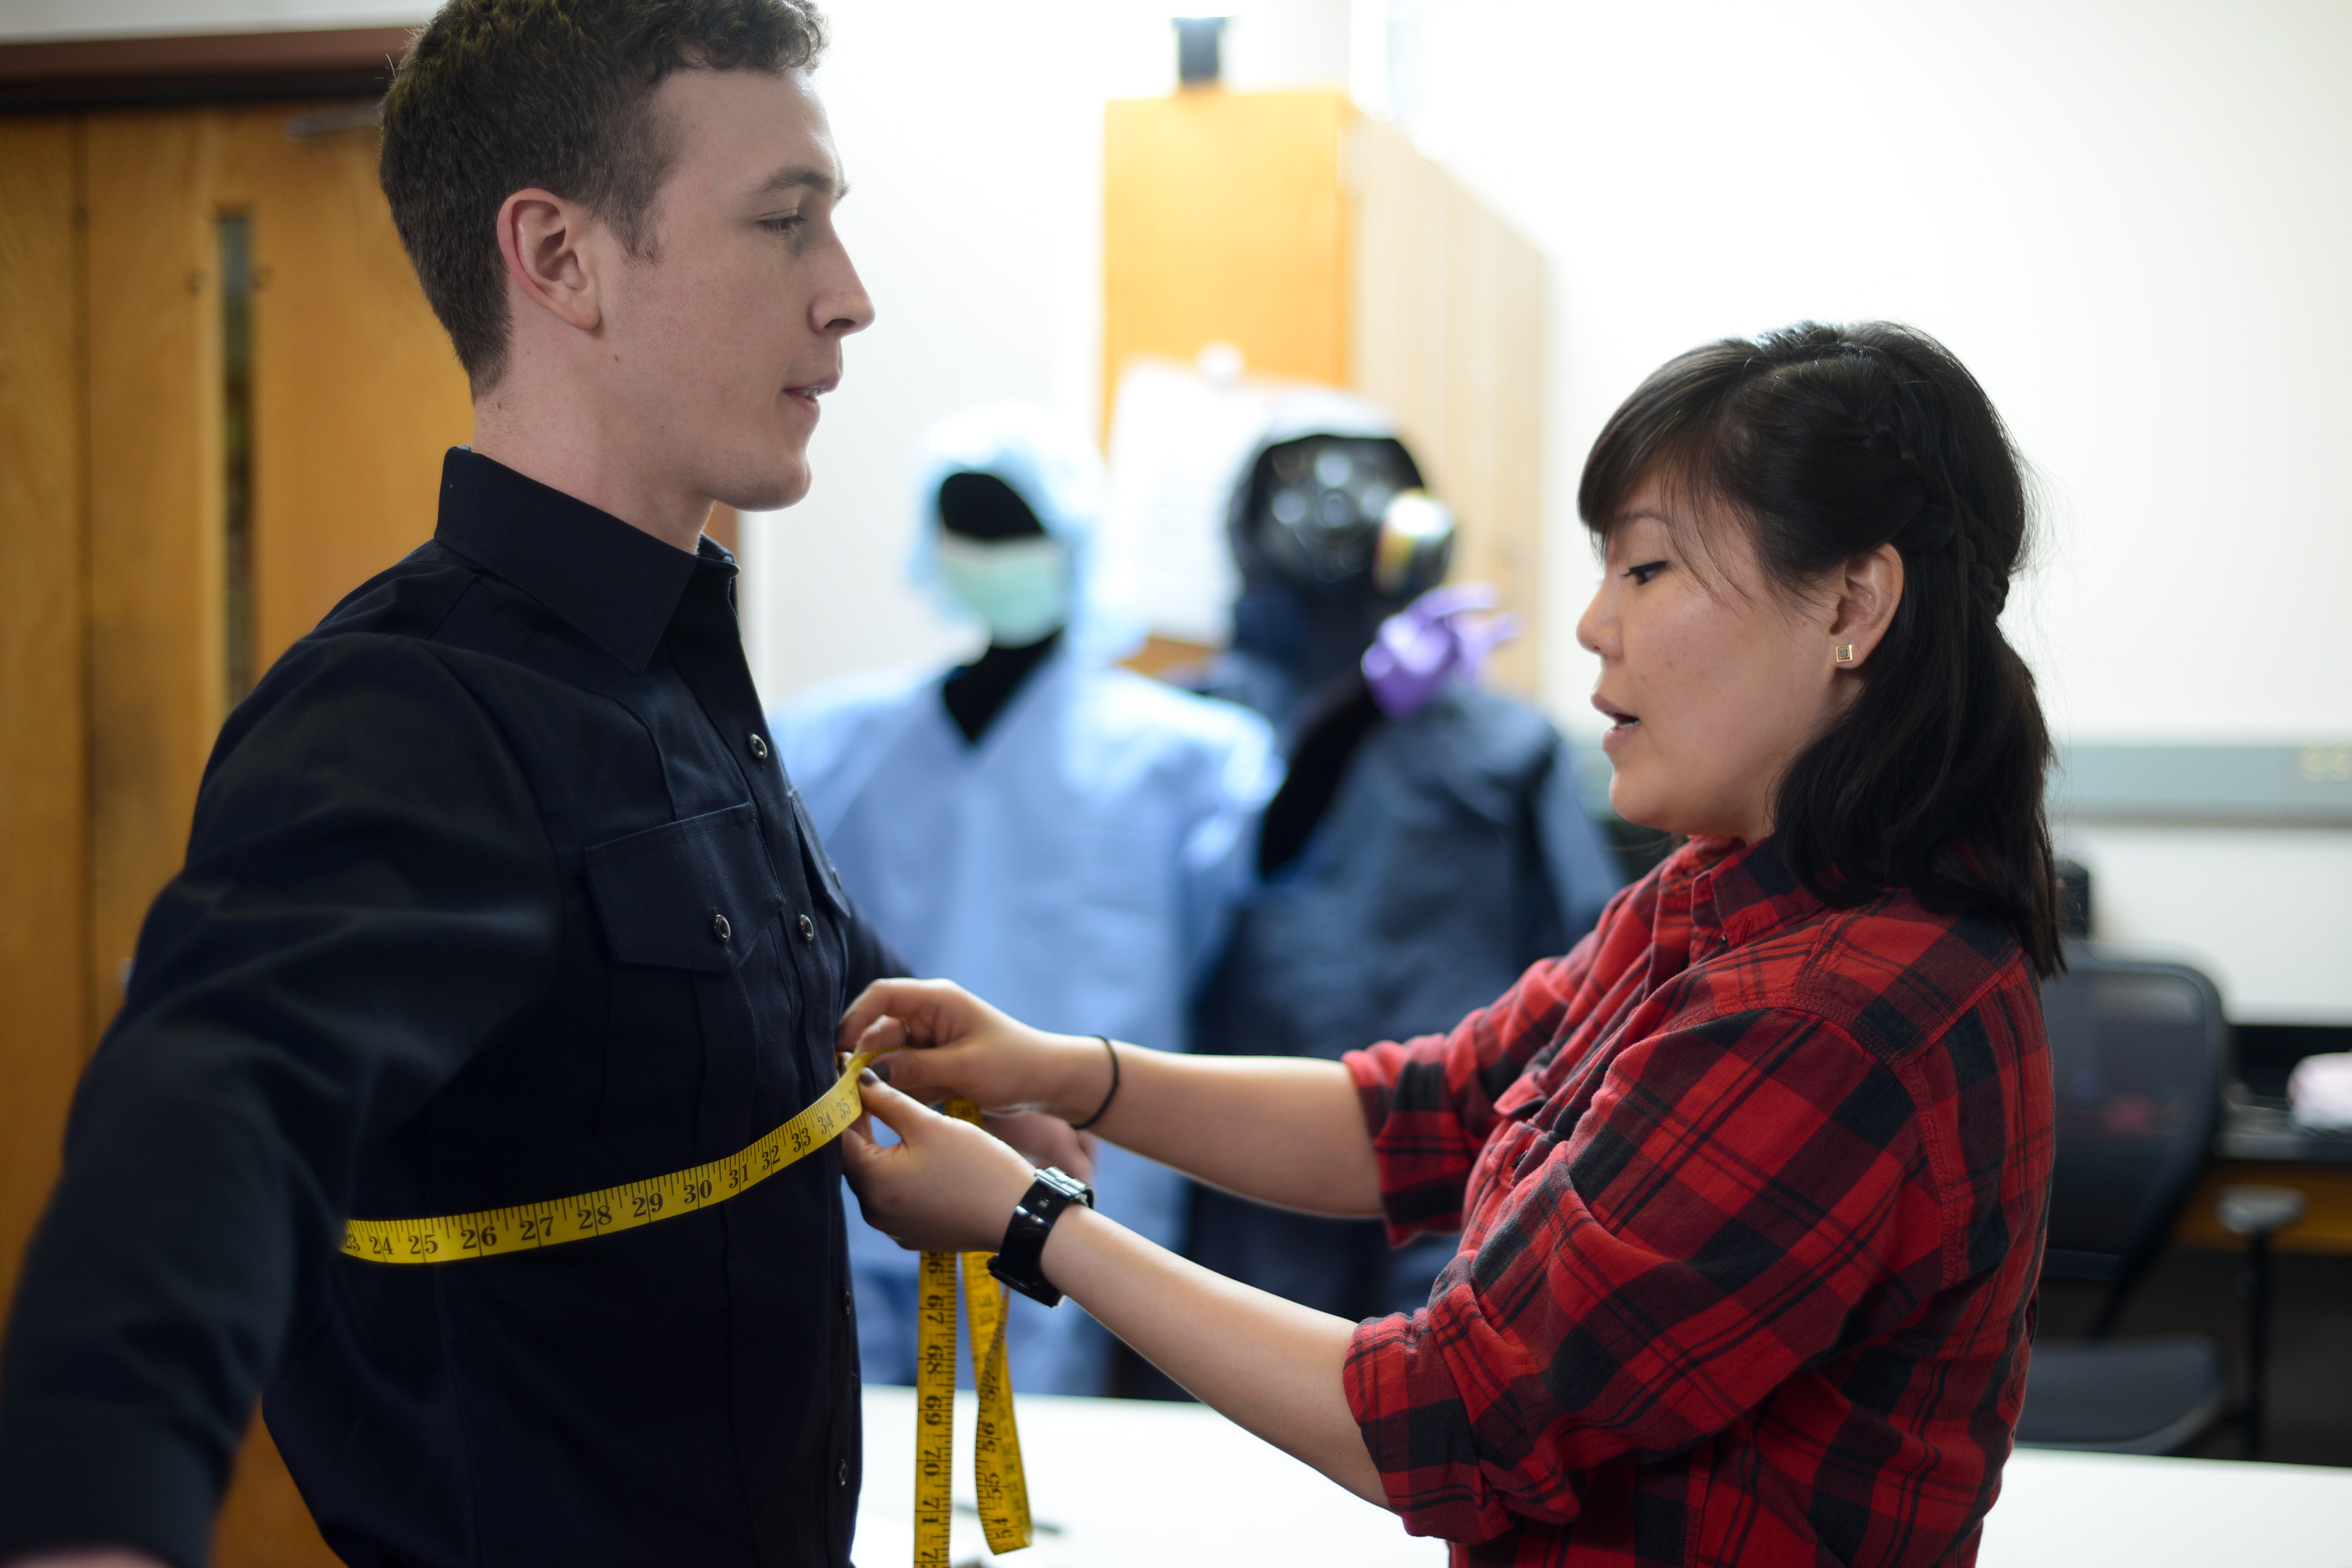 Researcher measures uniform shirt's fit on doctoral student